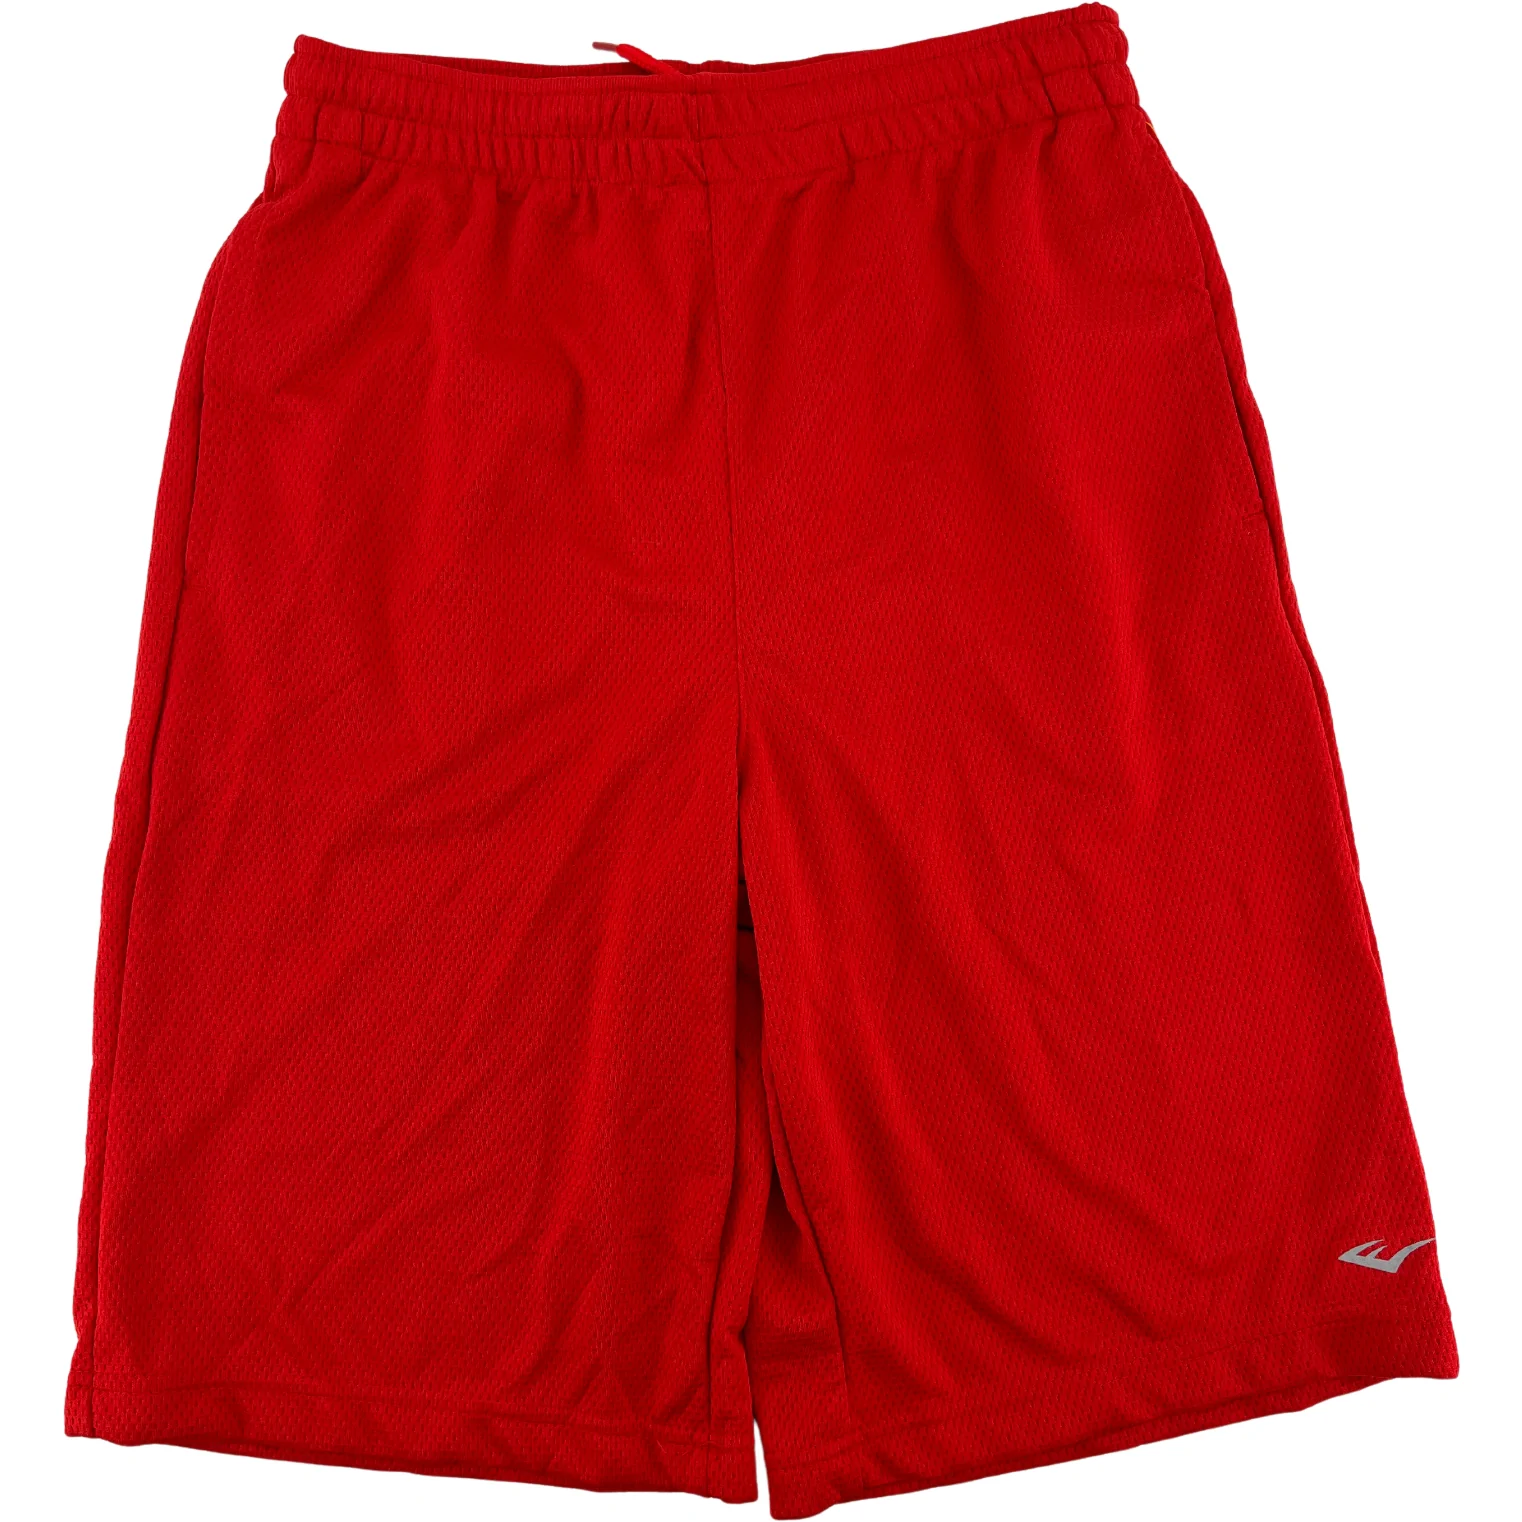 Everlast Boy's Shorts / Boy's Basketball Shorts / Red / Large (14/16)